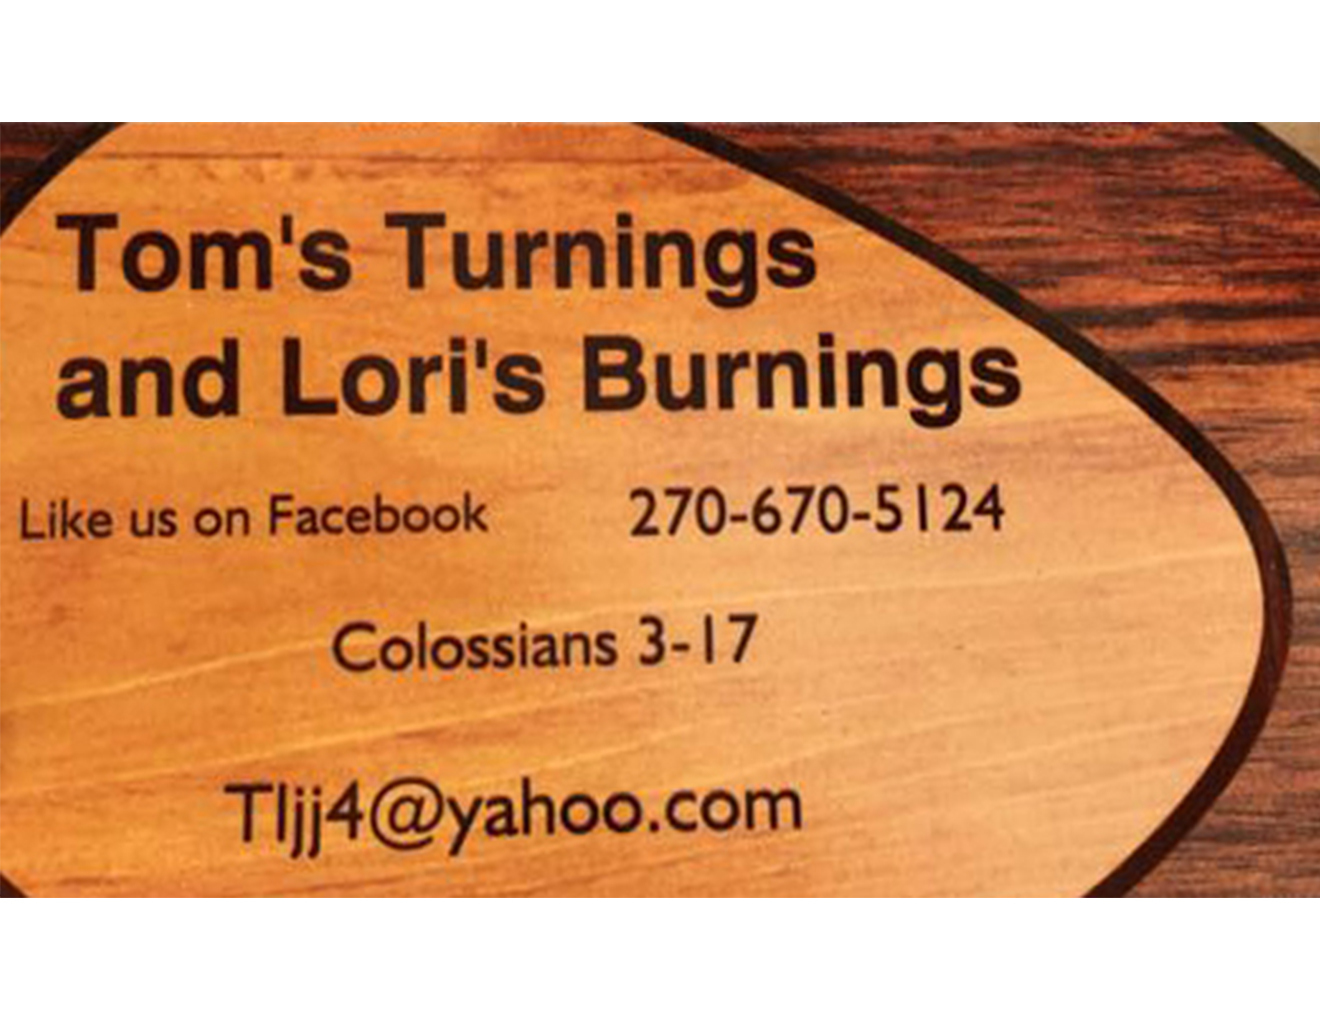 Tom's Turnings and Lori's Burnings logo